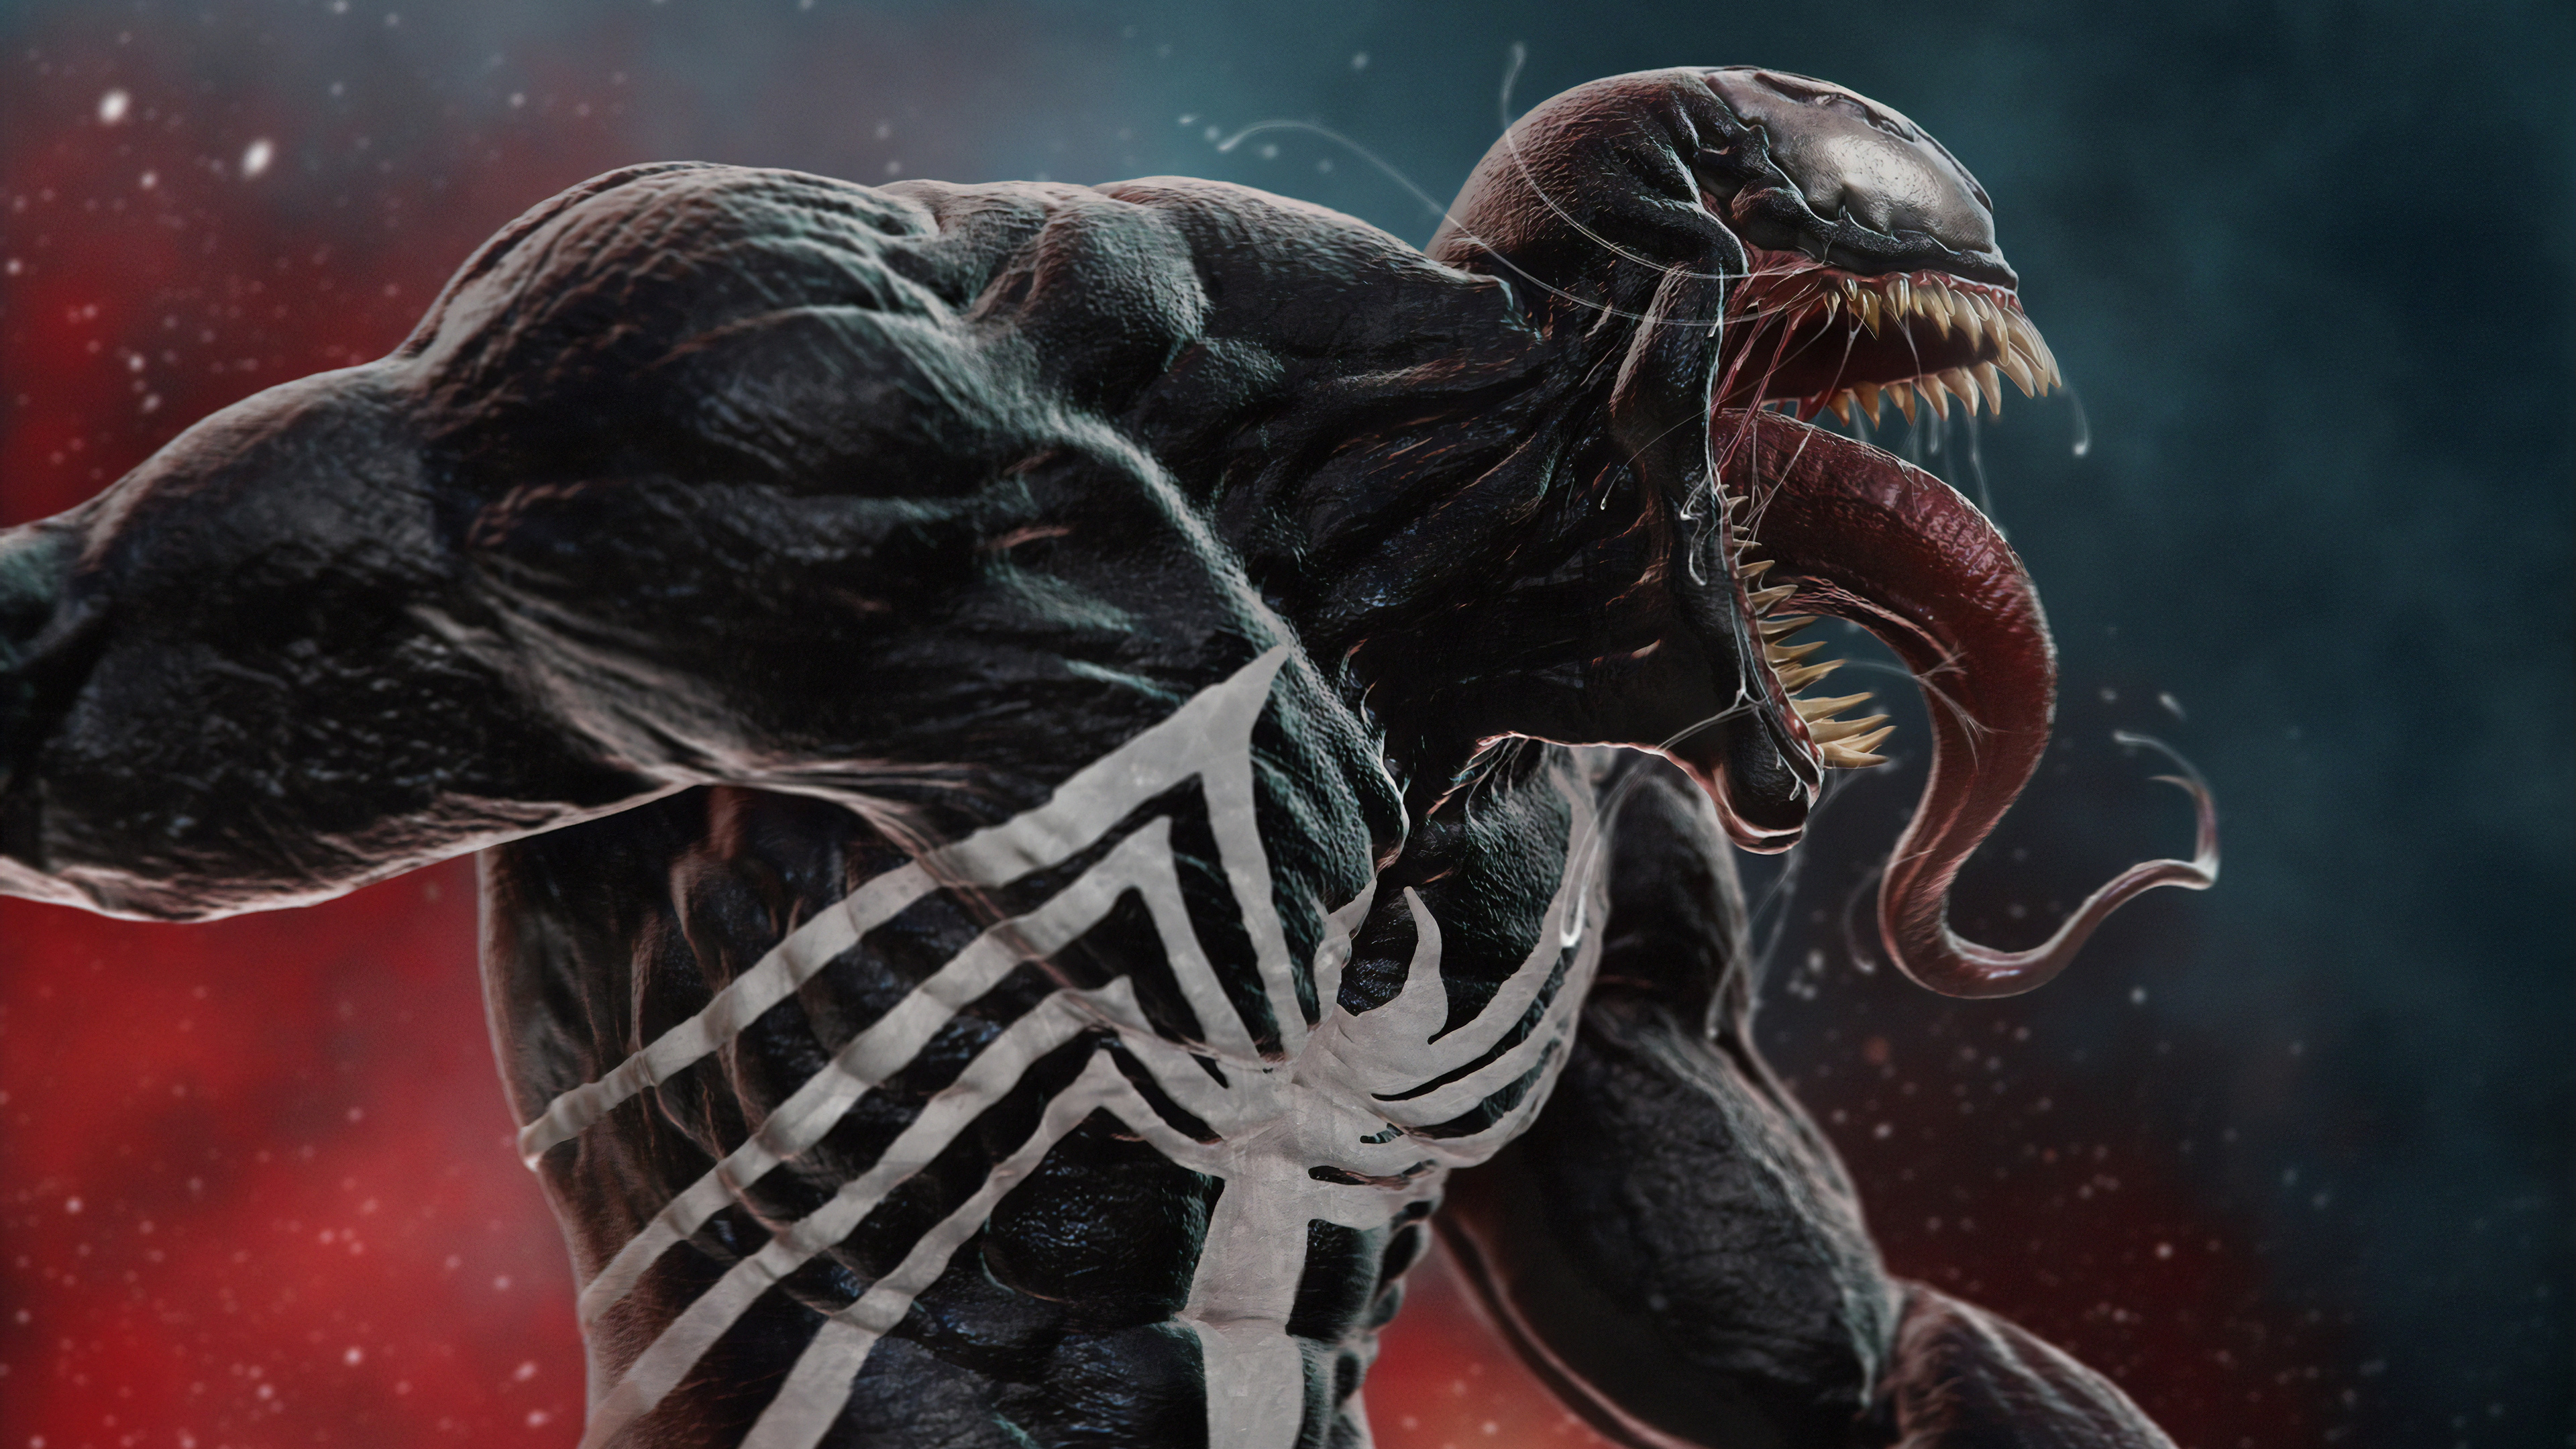 Venom Newart Venom wallpapers, superheroes wallpapers, hd-wallpapers